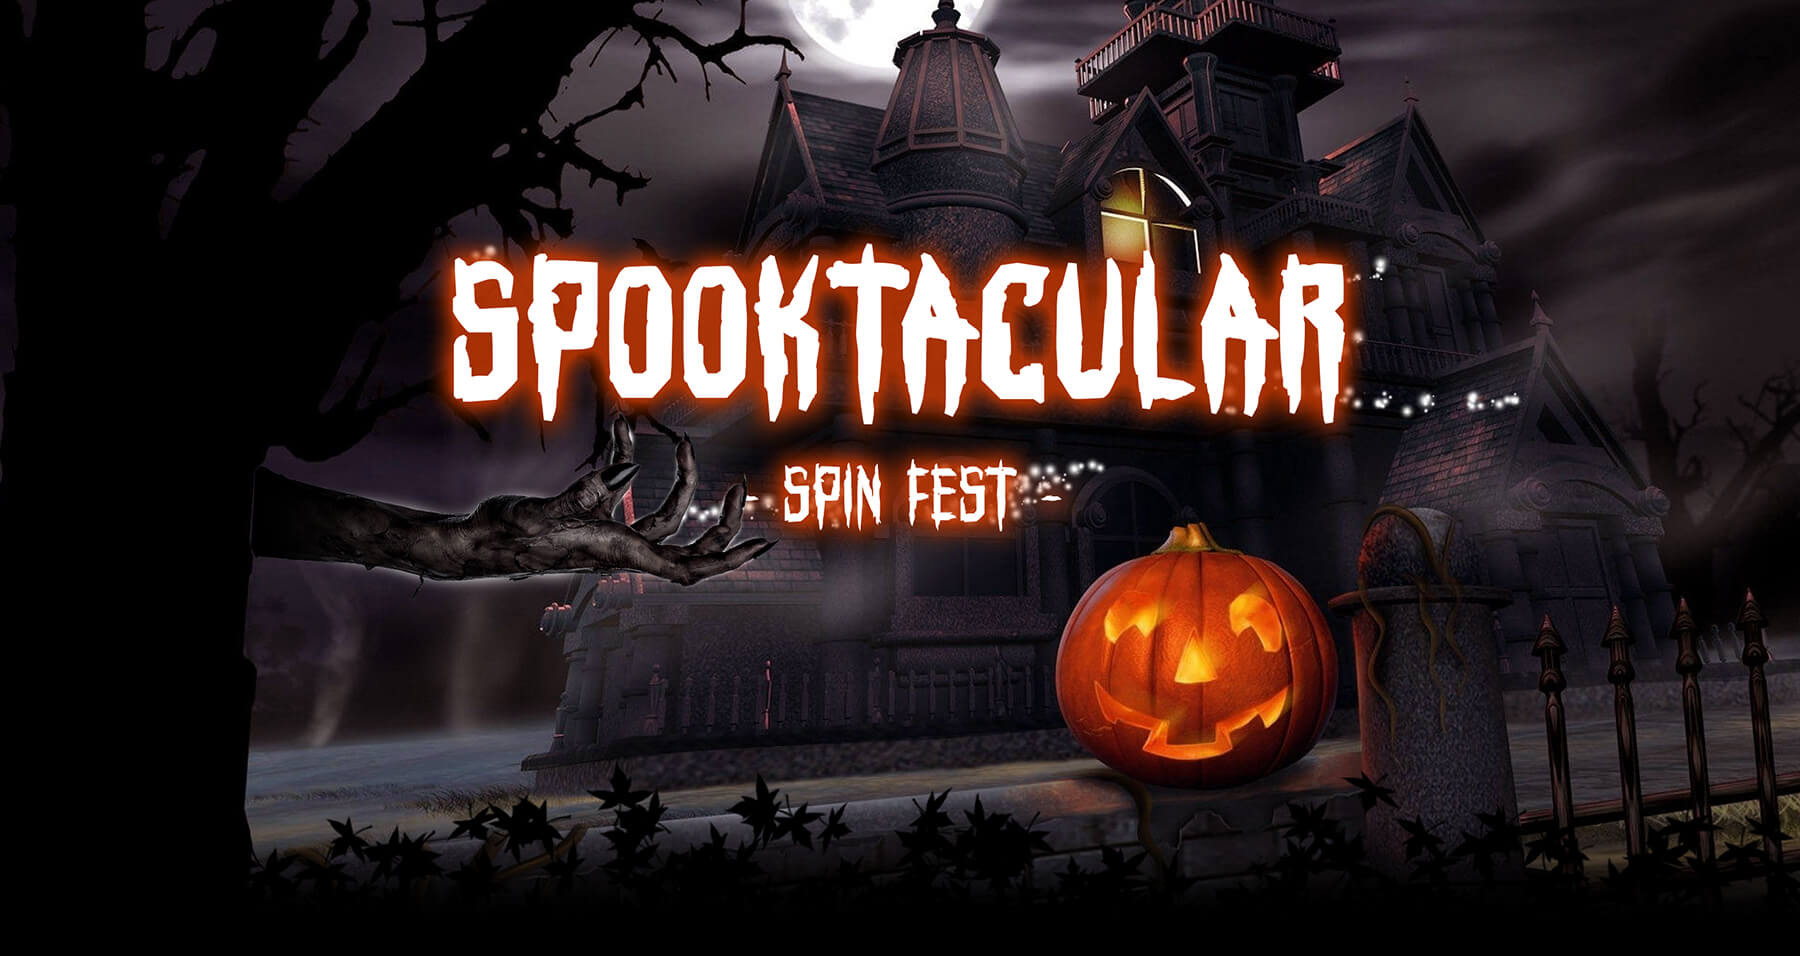 SpooktacularFest